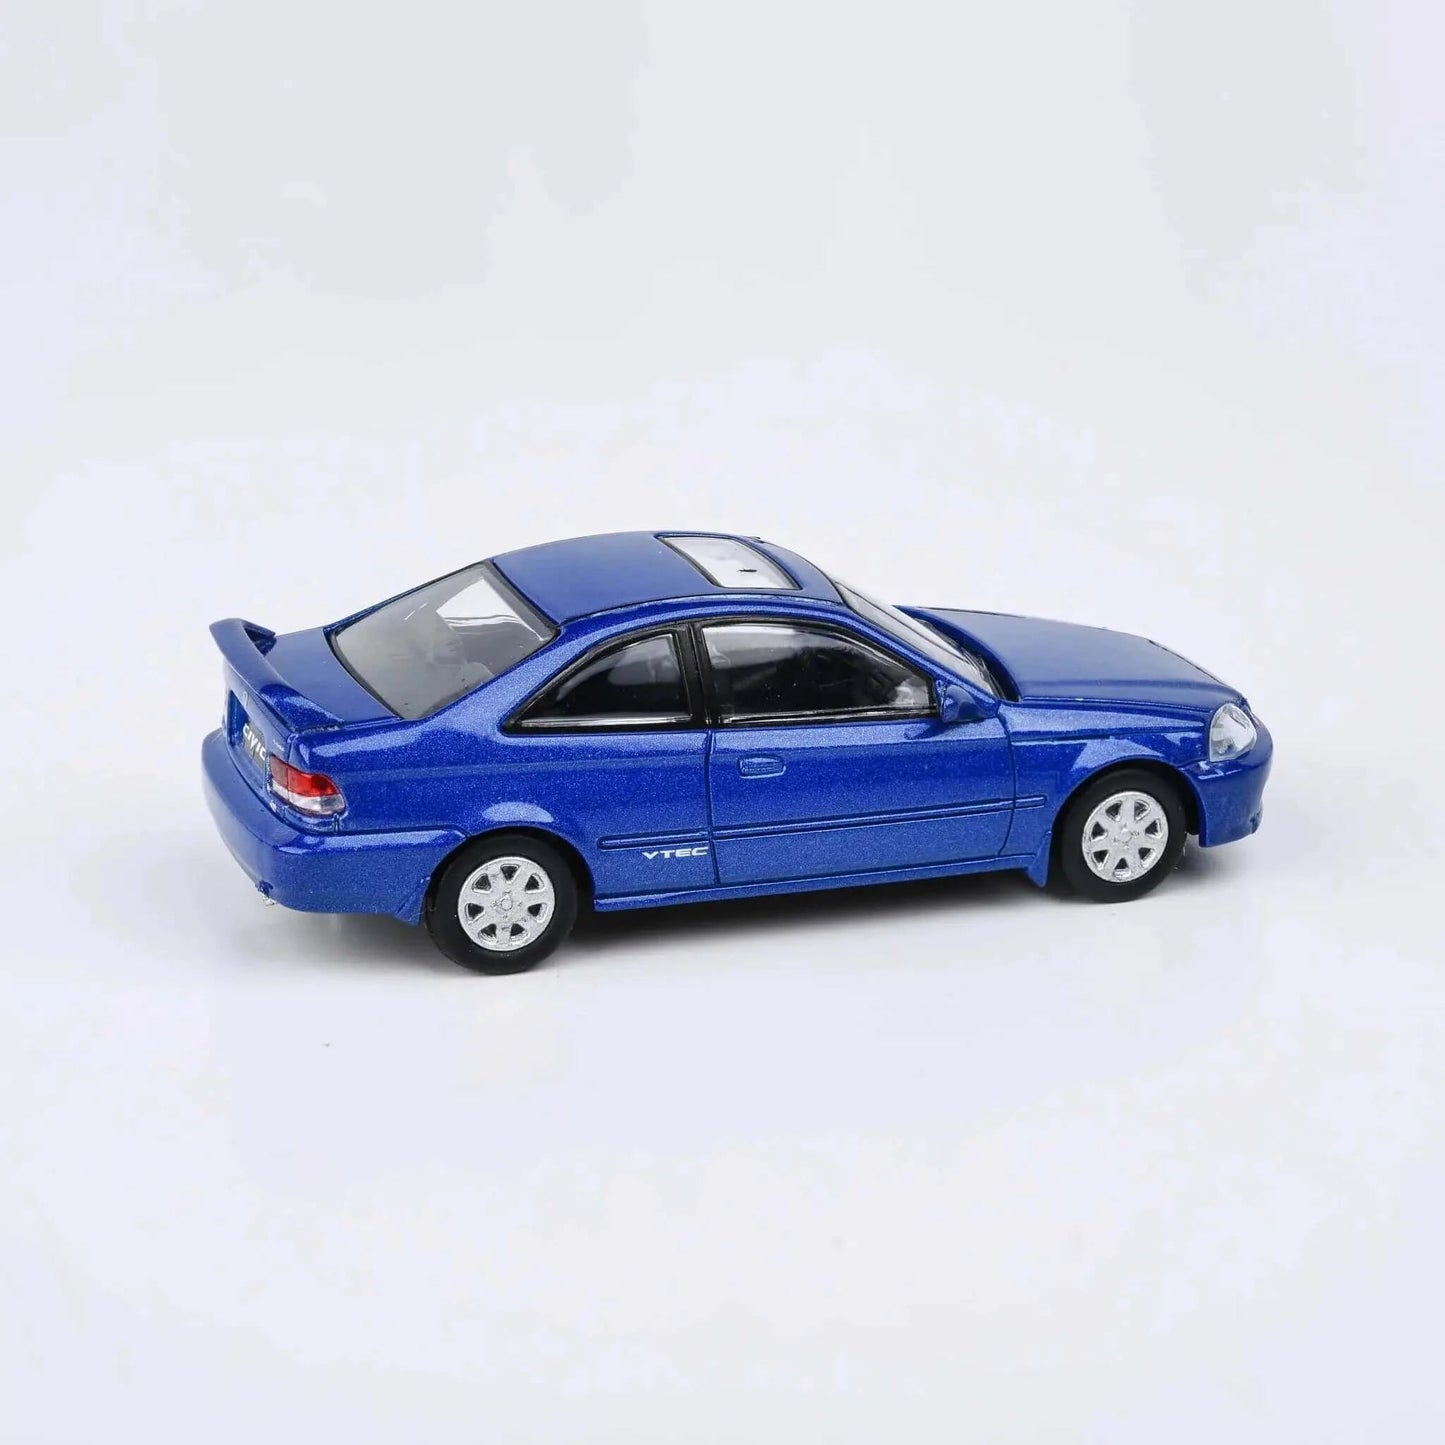 Honda civic Si EM1 1999 blue LHD Para64 1/64 - pa55621lhd